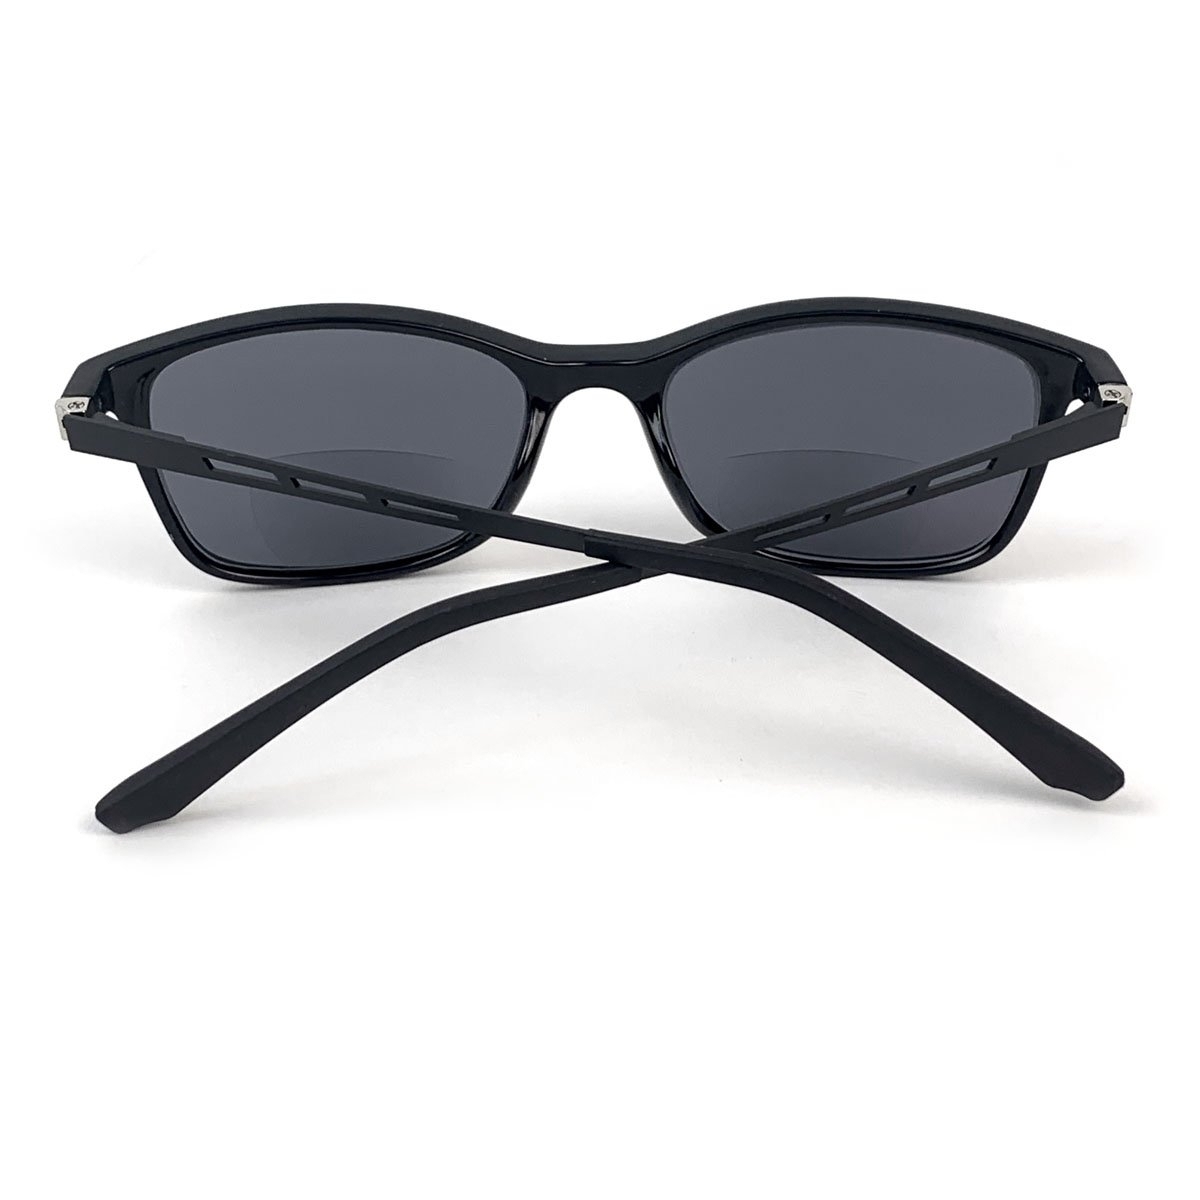 Bifocal Sun Readers Classic Frame Geek Retro Style Reading Sunglasses - Black, +3.00